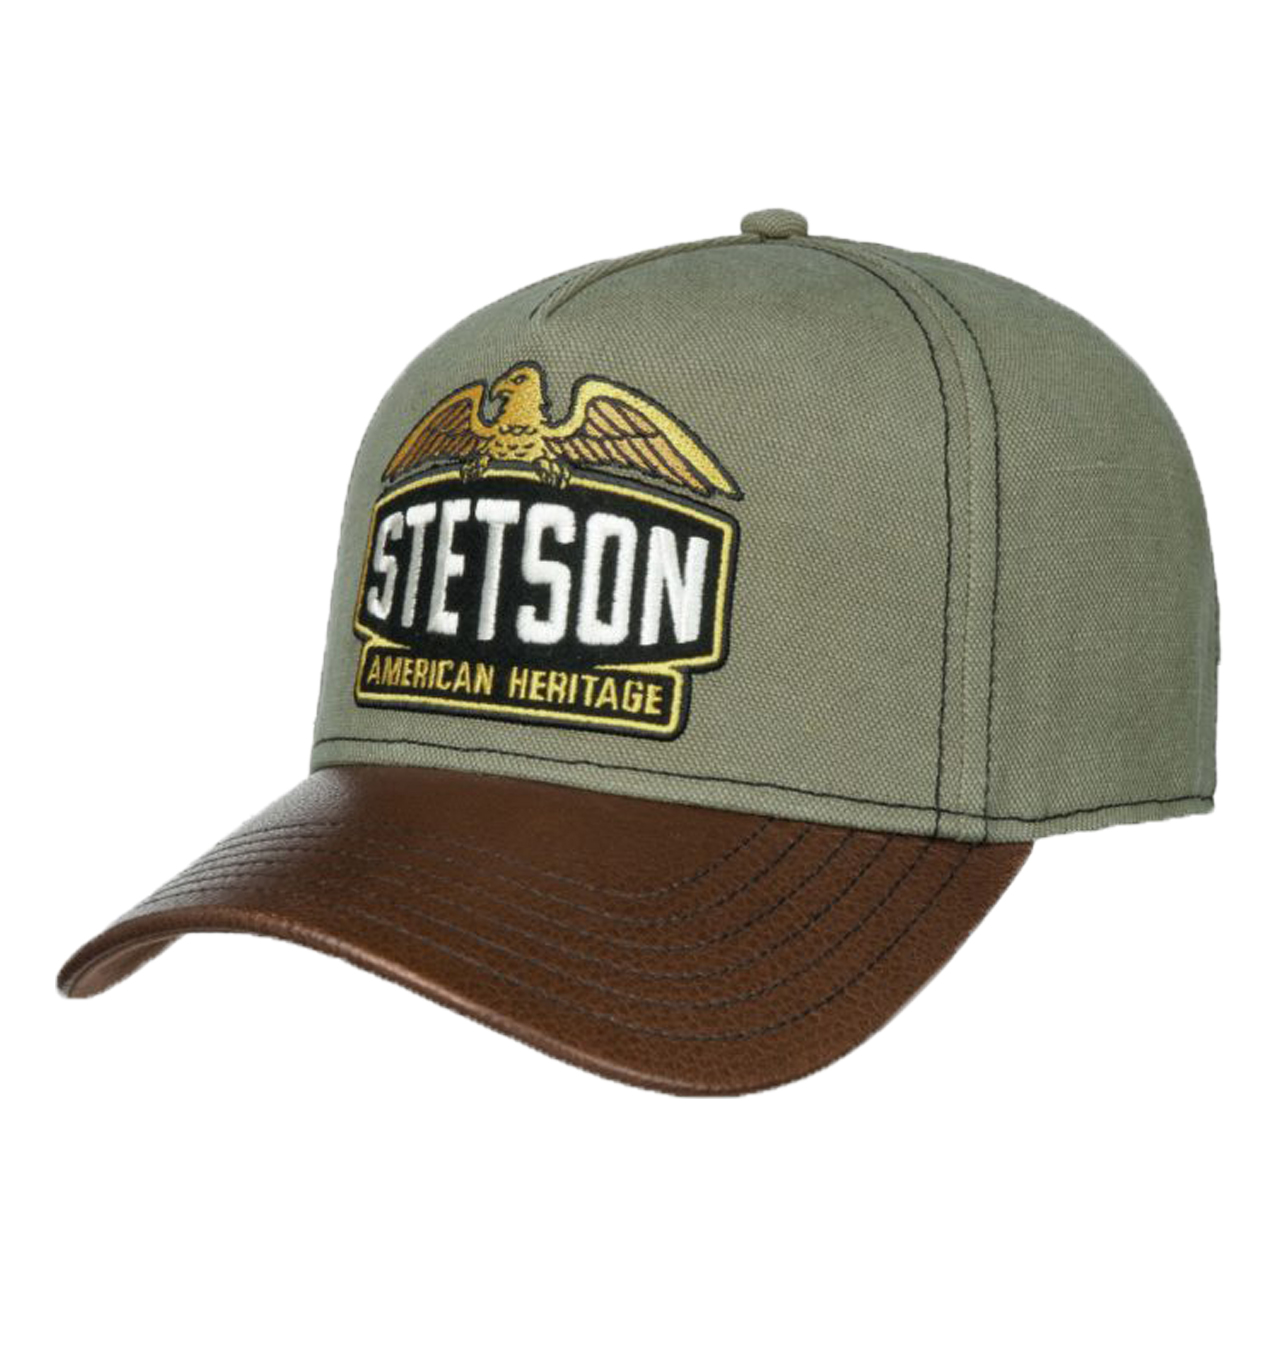 Stetson - American Heritage Trucker Cap - Army